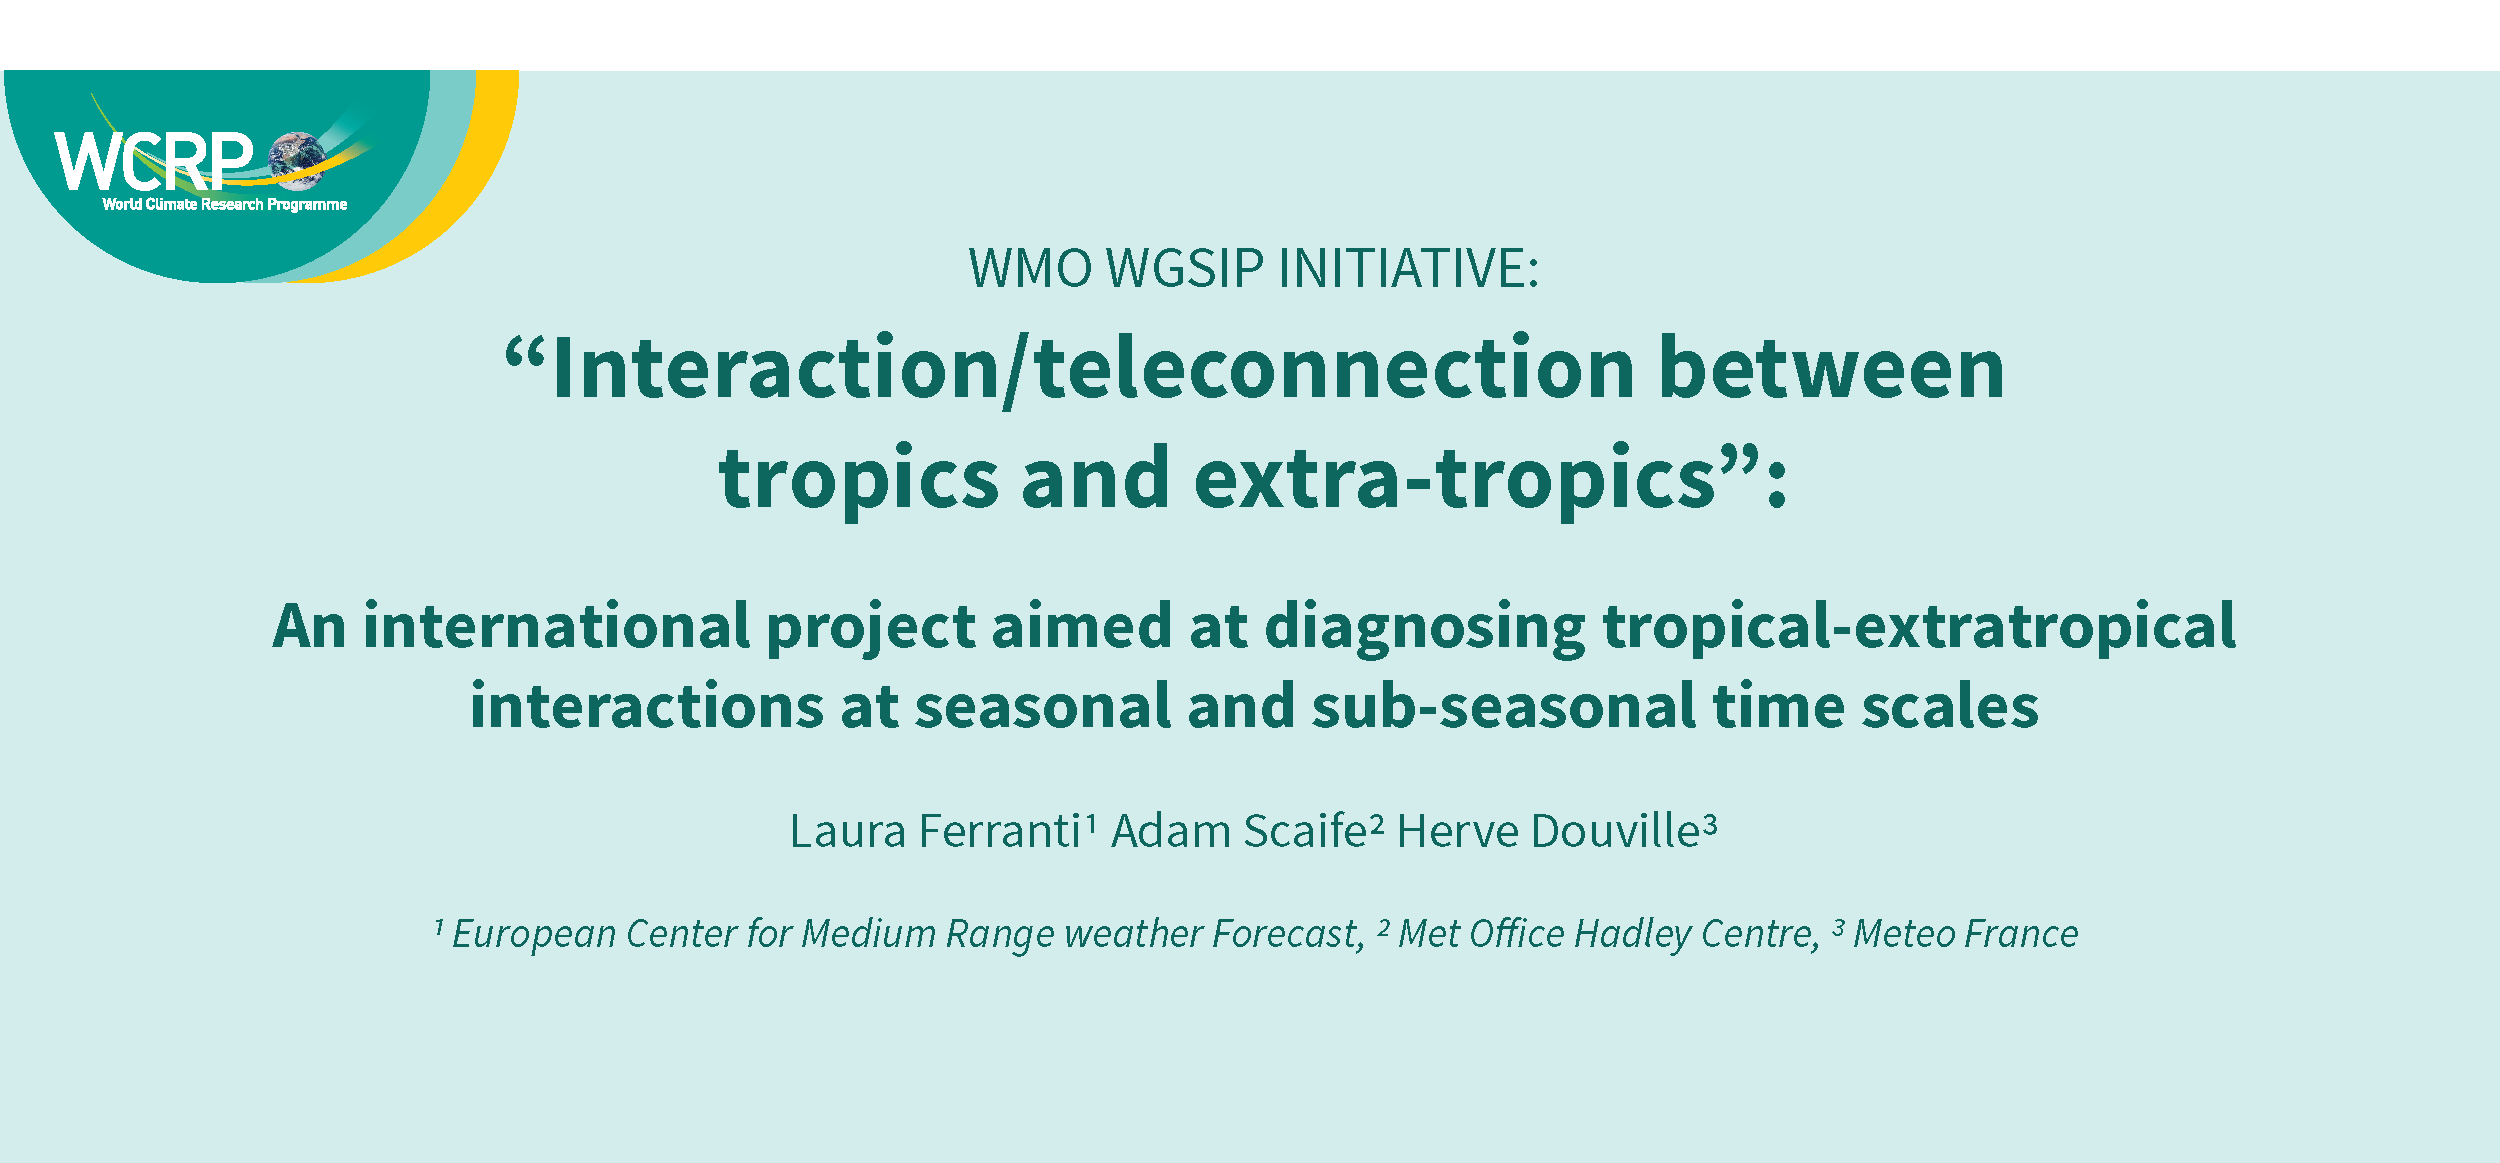 Interaction/teleconnection between tropics and extra-tropics